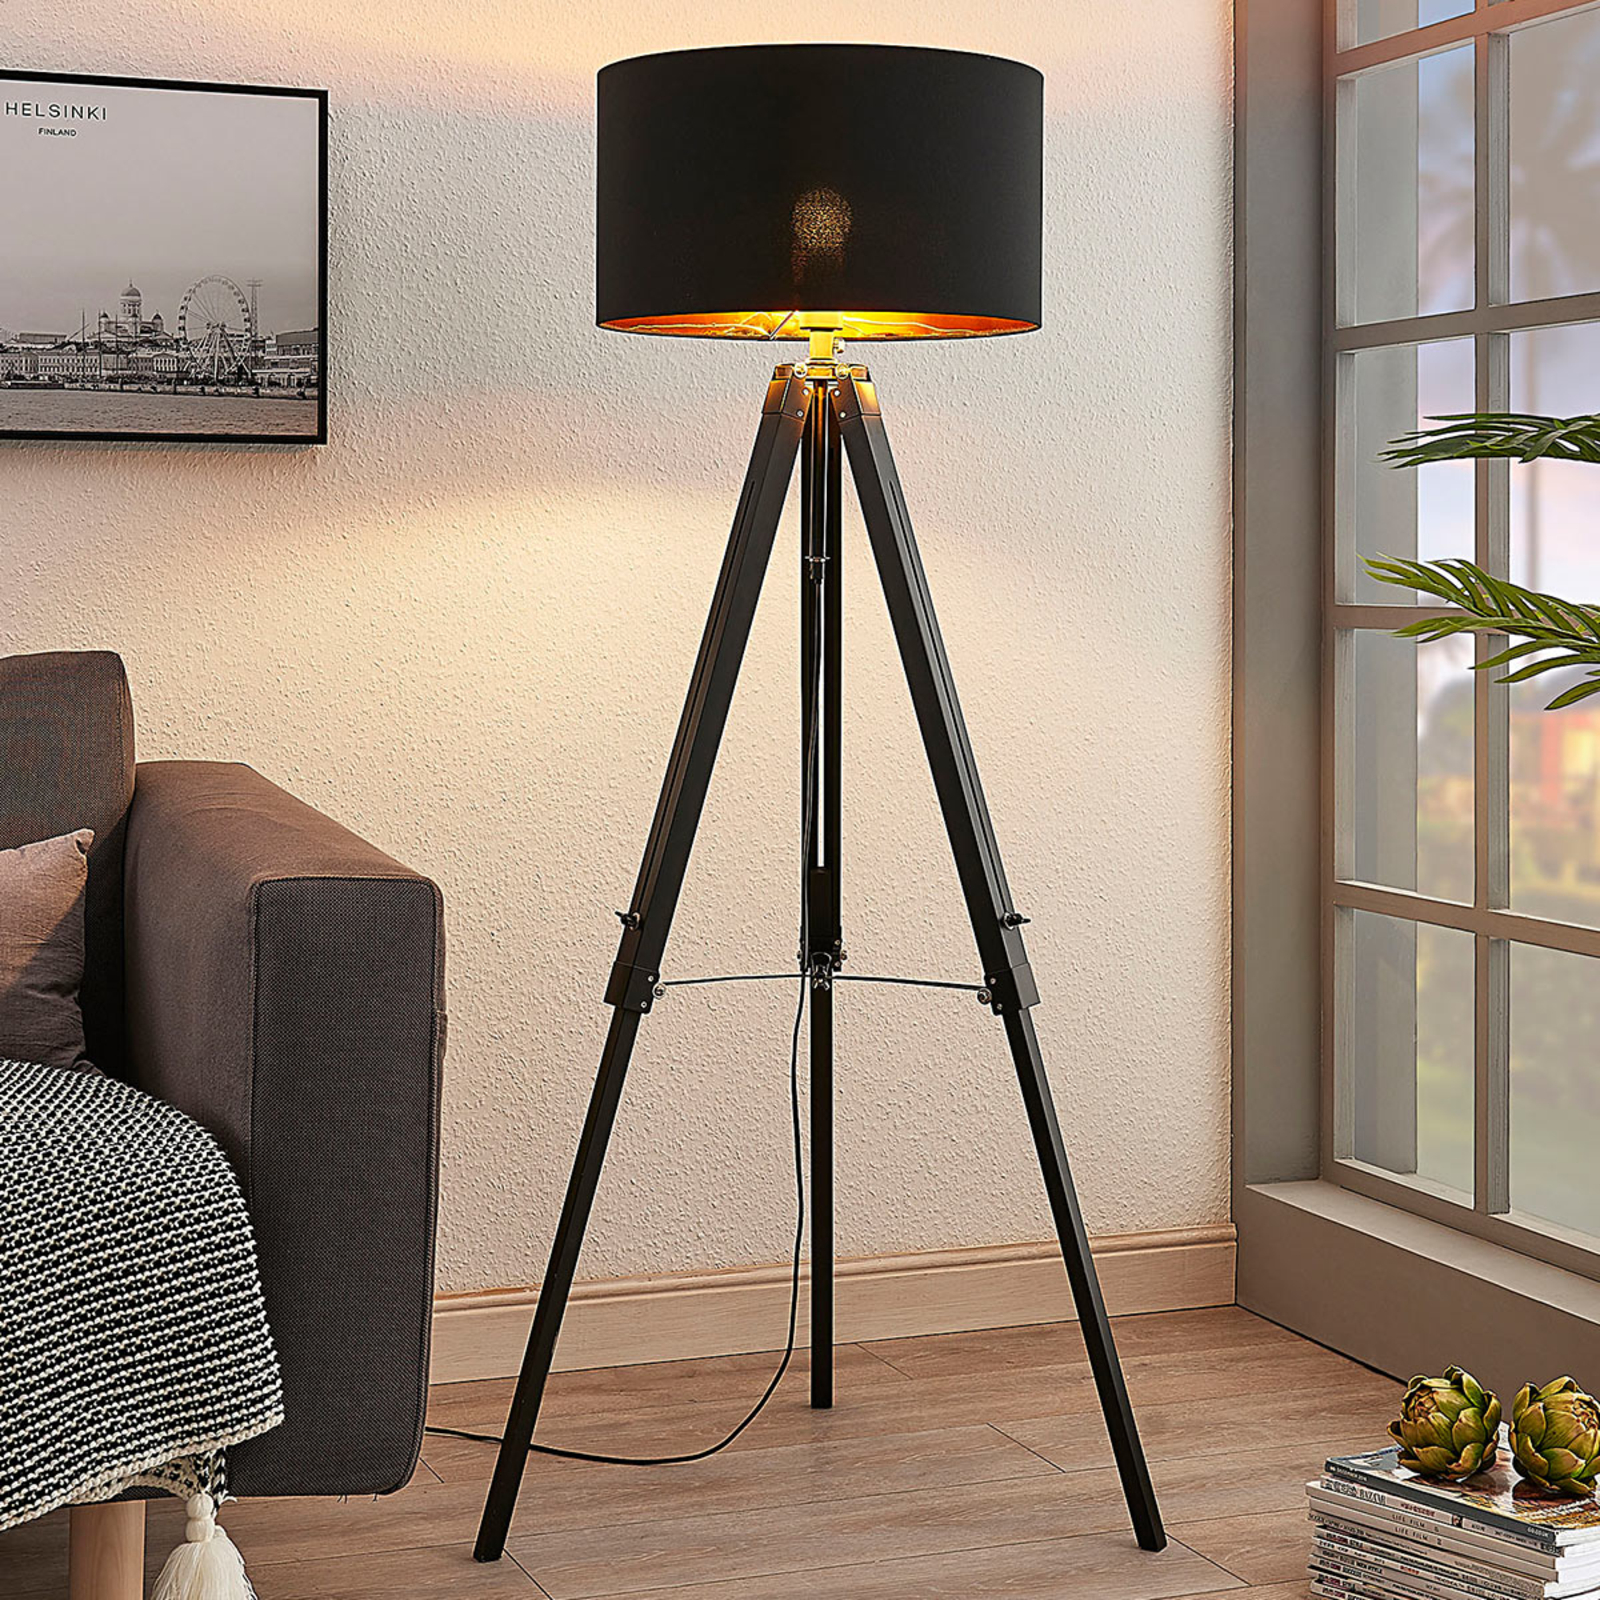 Tripod floor lamp Triac with wooden frame, black